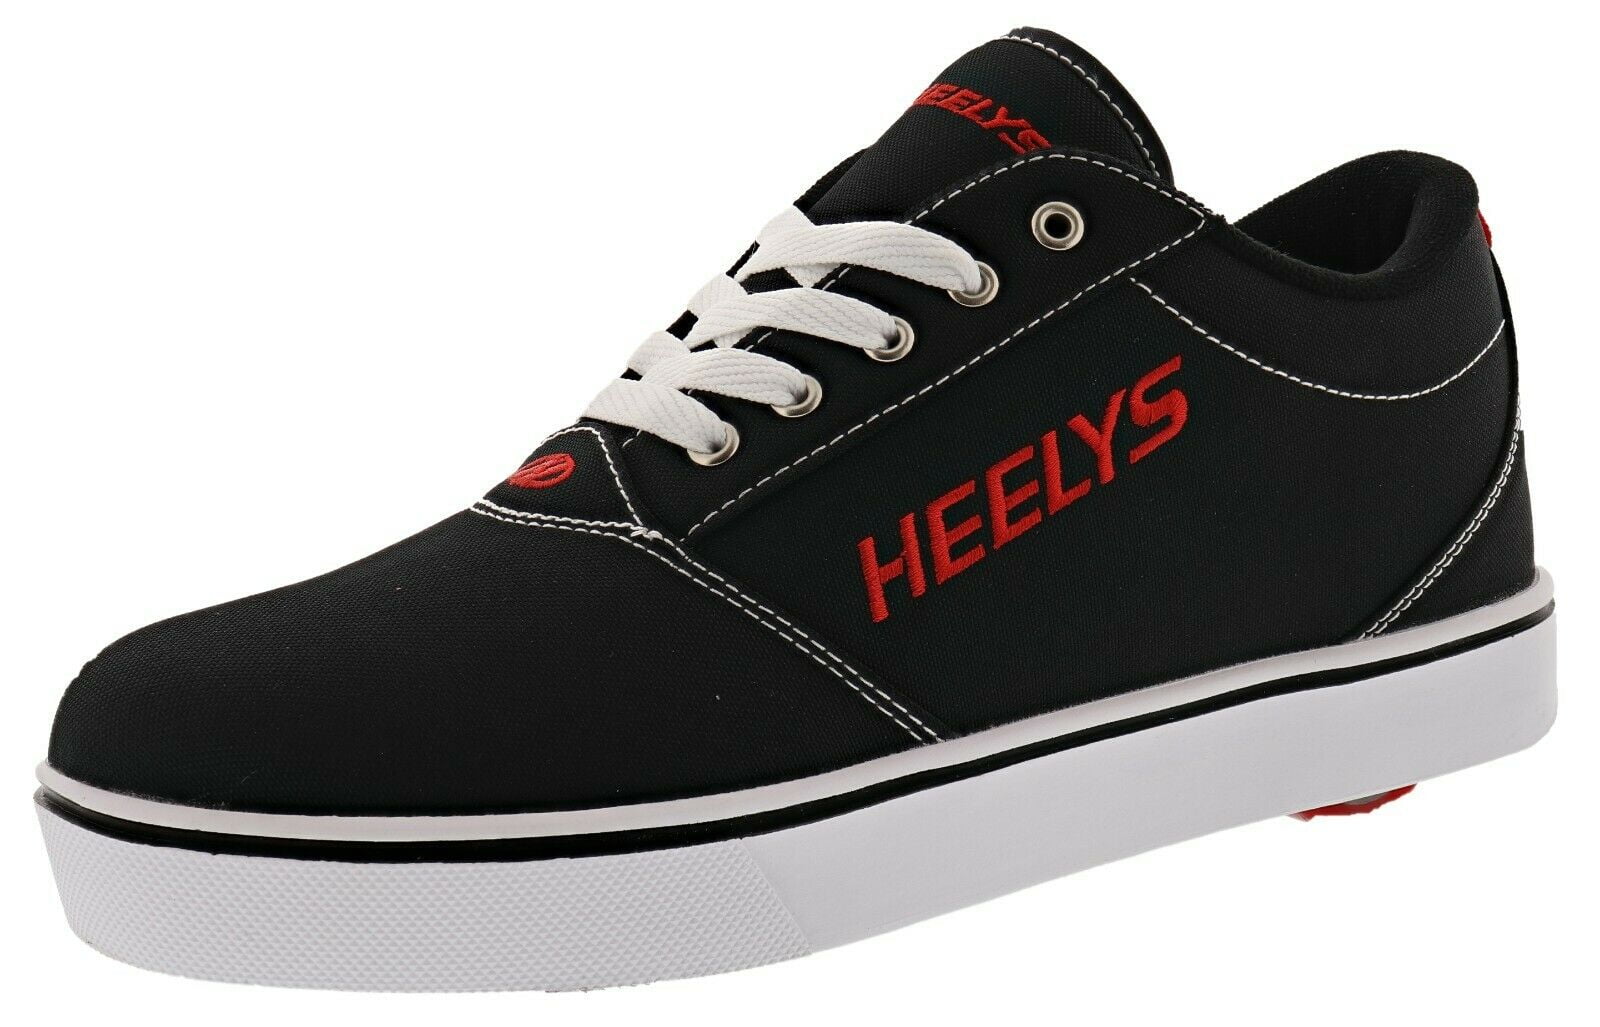 Heelys Heelys Roller/Skate Shoes Size 4Y 